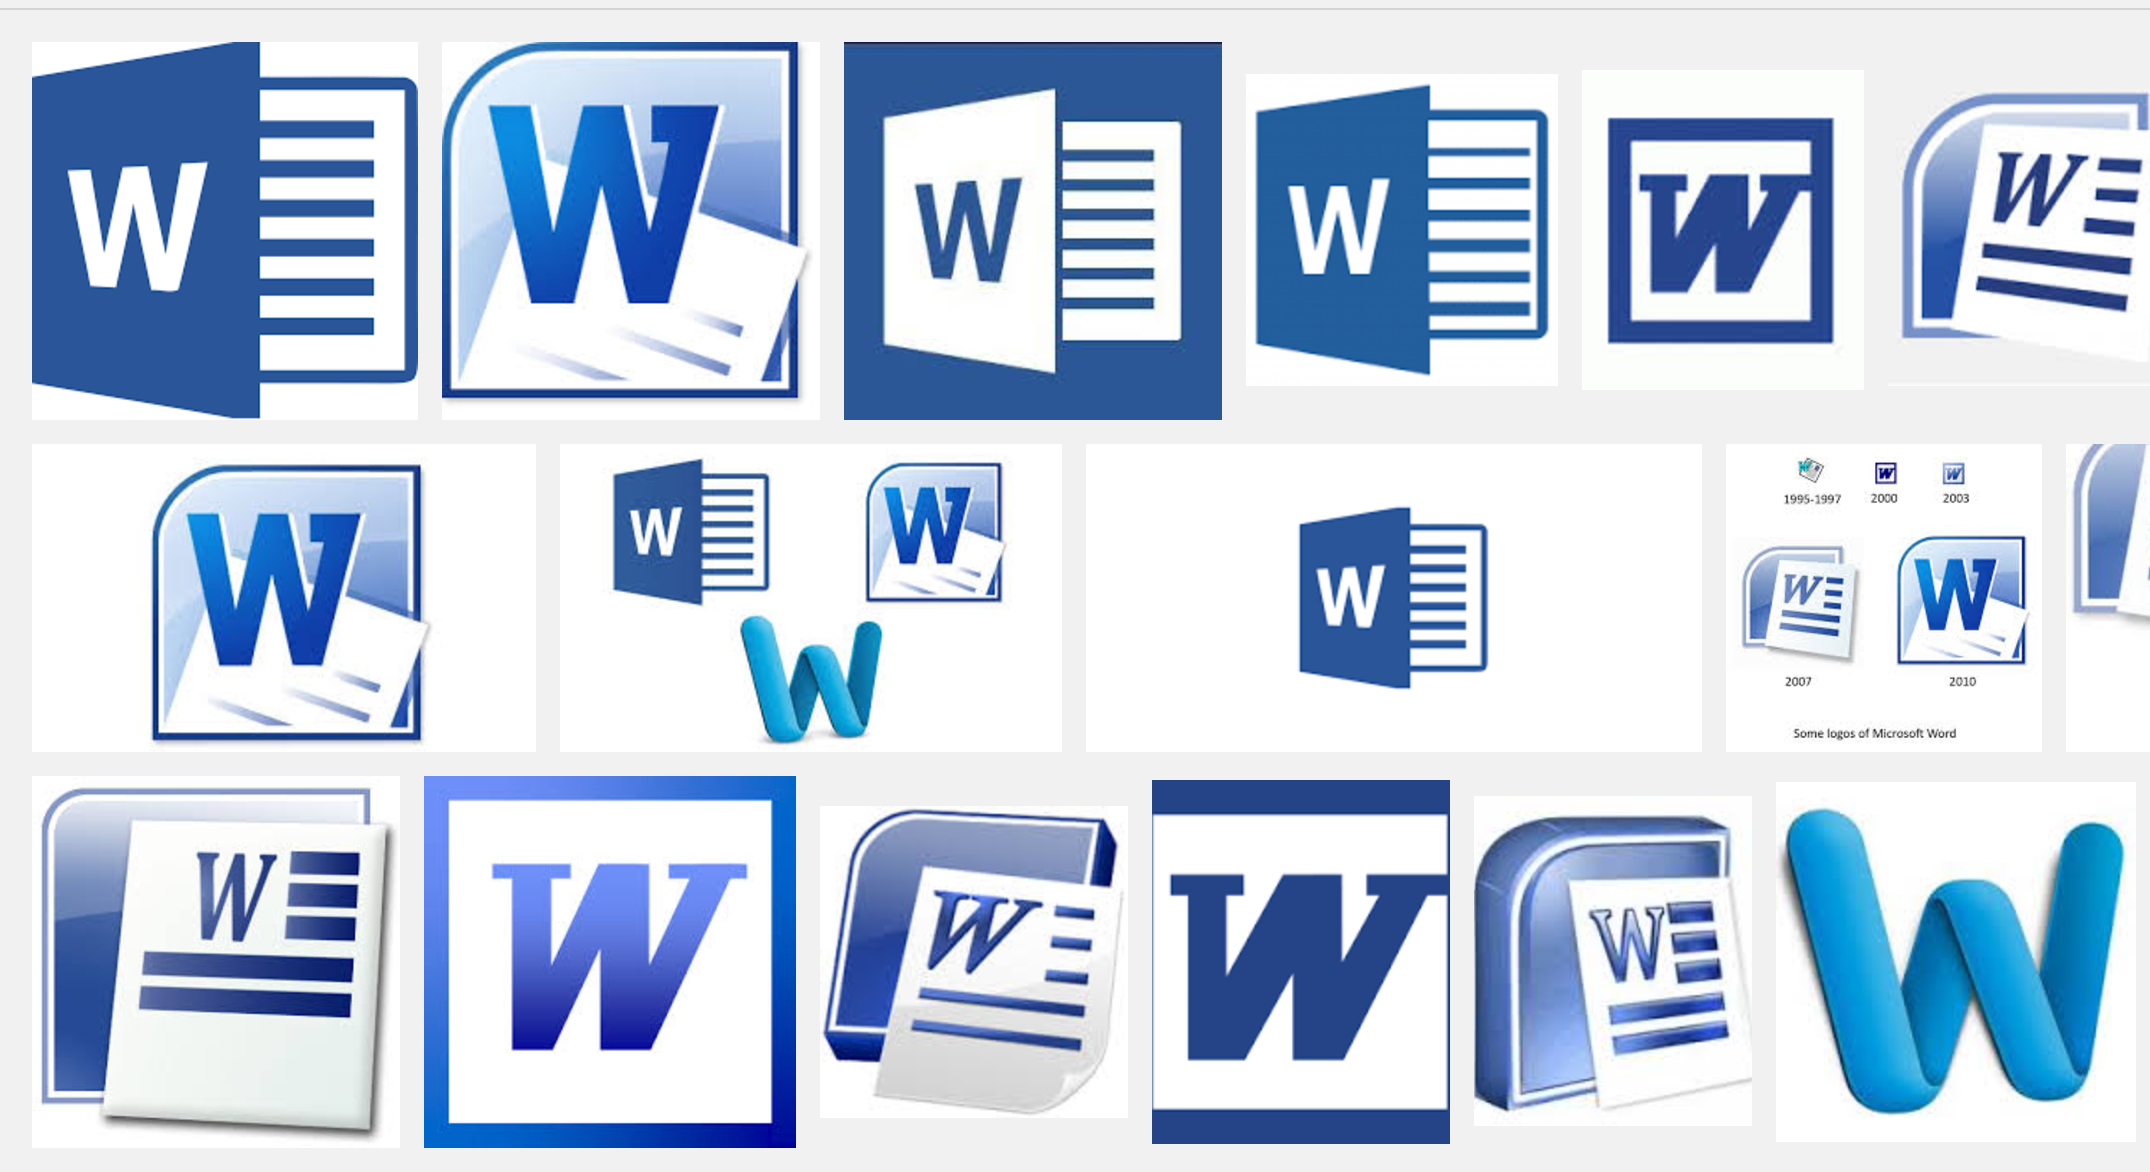 Office word can. Значок Microsoft Office Word. Текстовый процессор Microsoft Office Word. Картинки для ворда. Значок Word 2007.